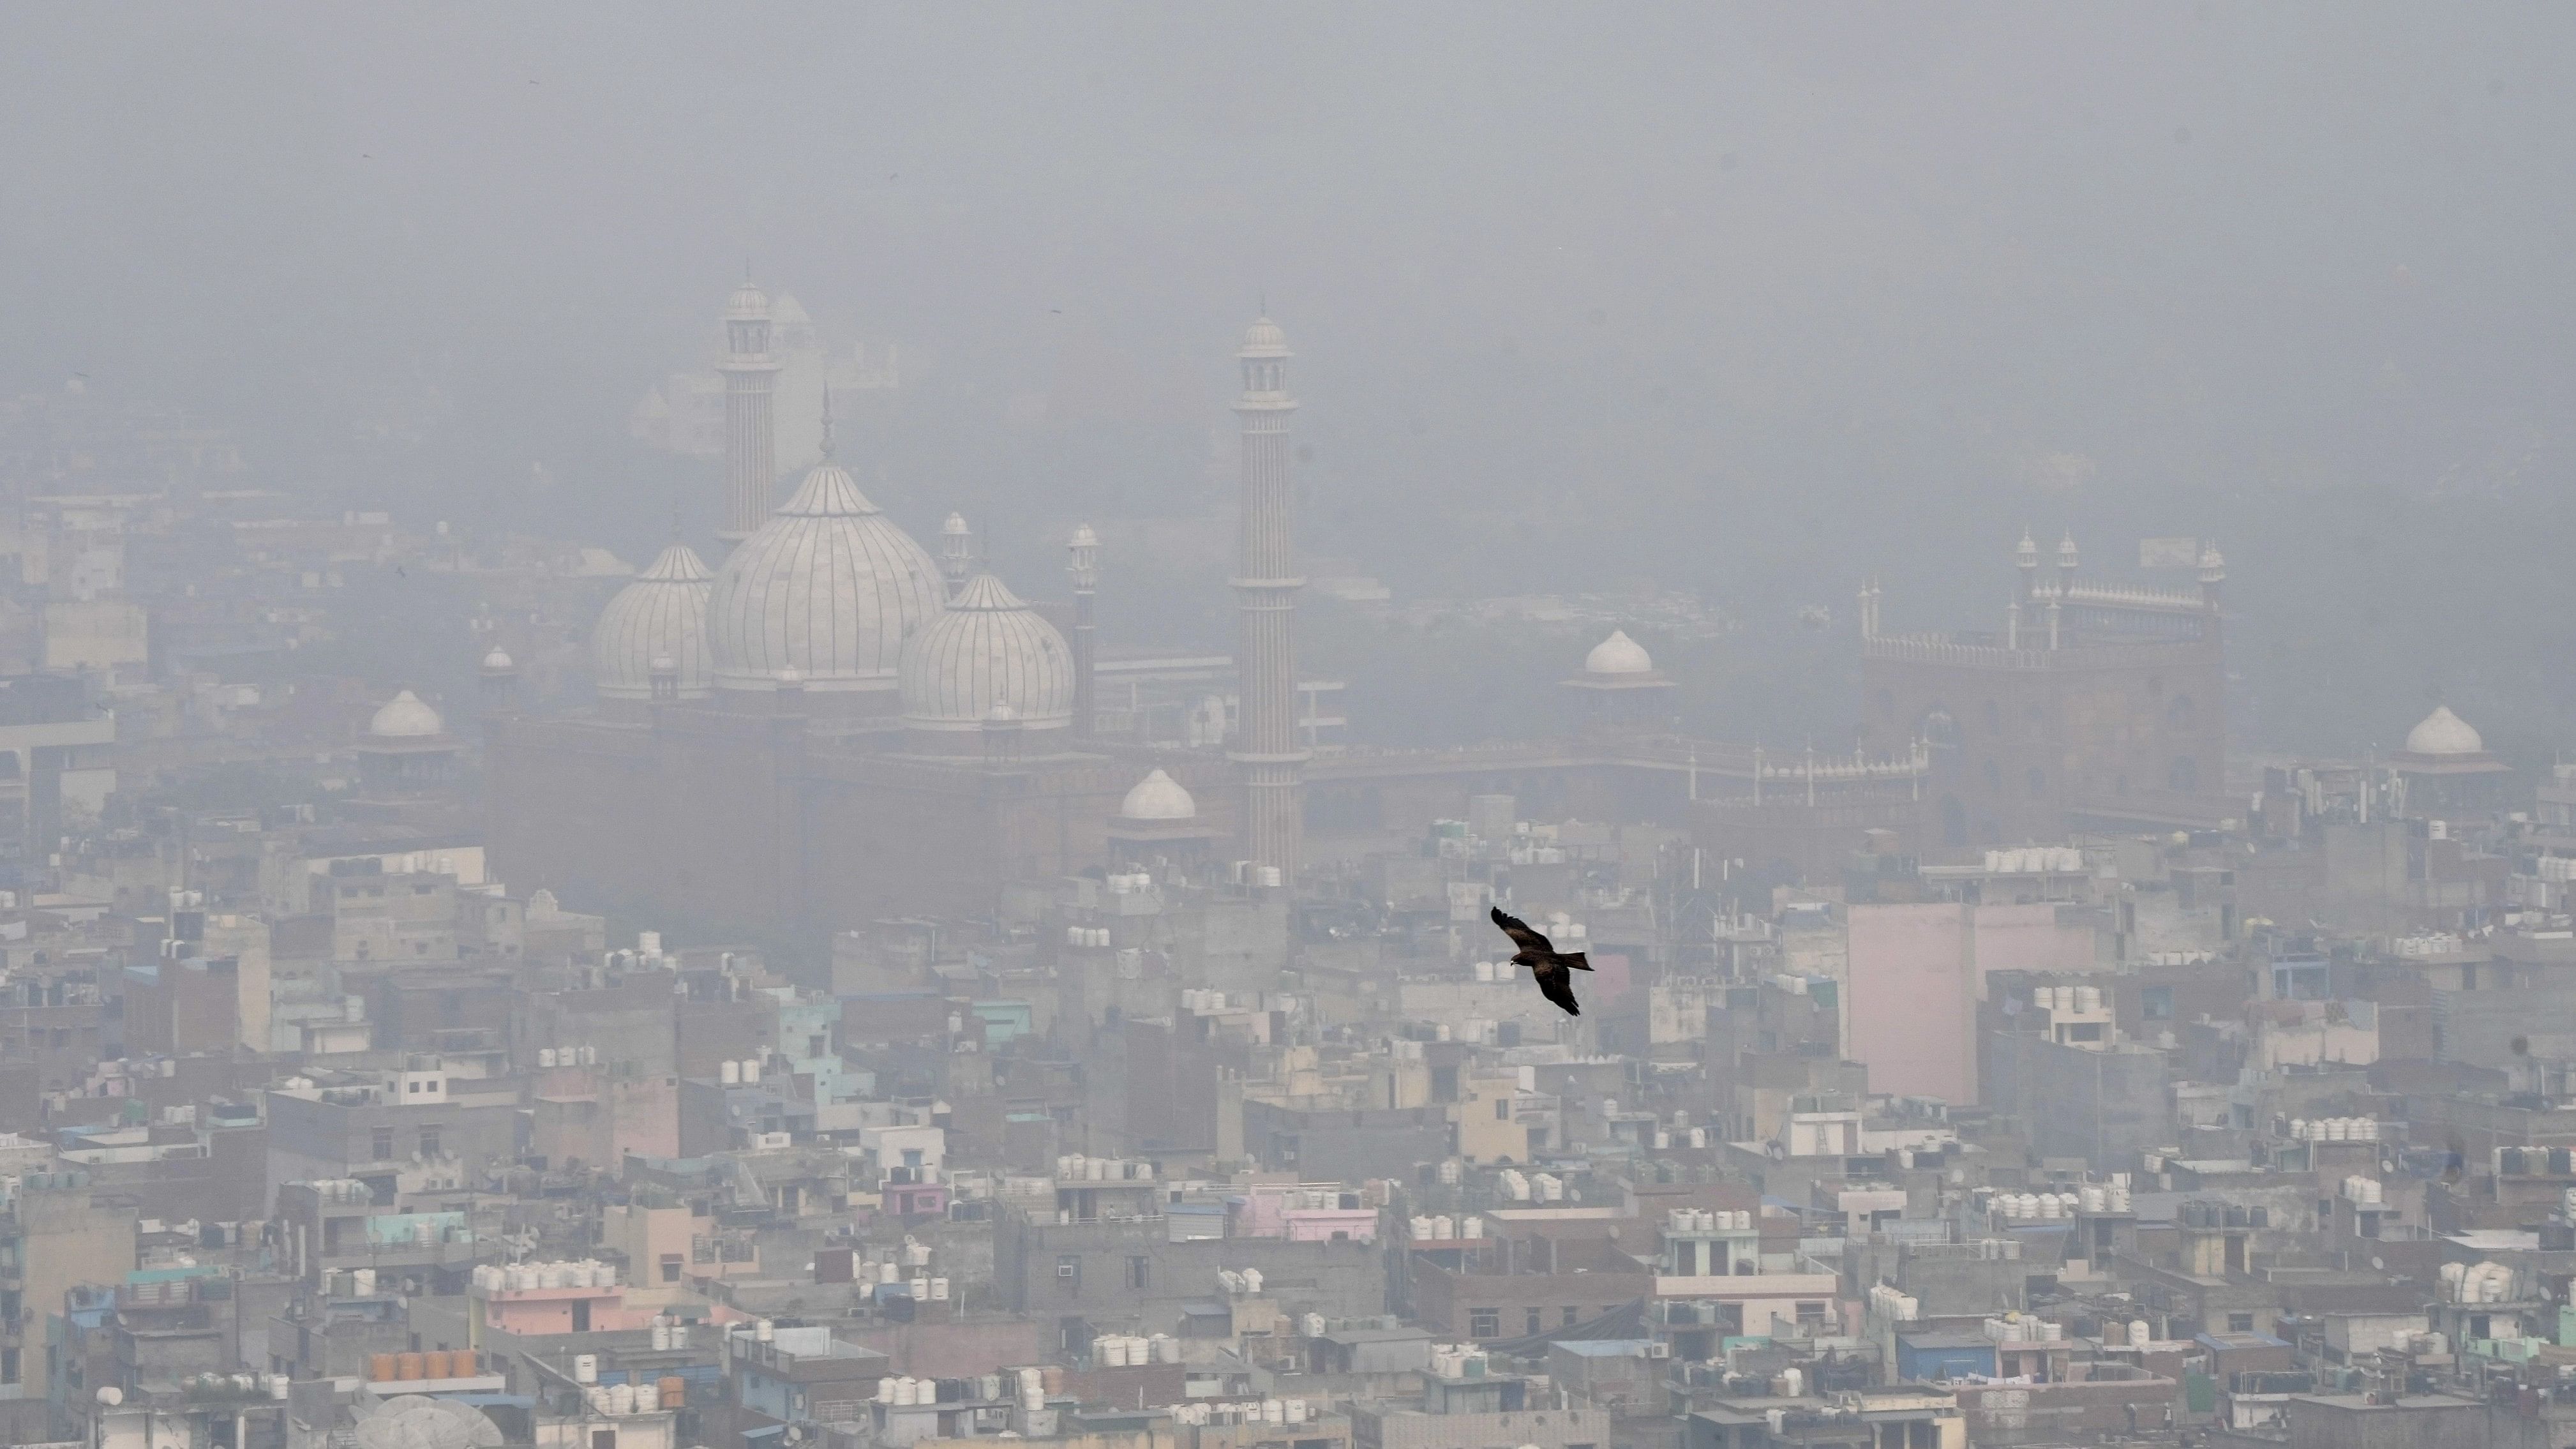 <div class="paragraphs"><p> The capital city of Delhi enveloped in smog.</p></div>